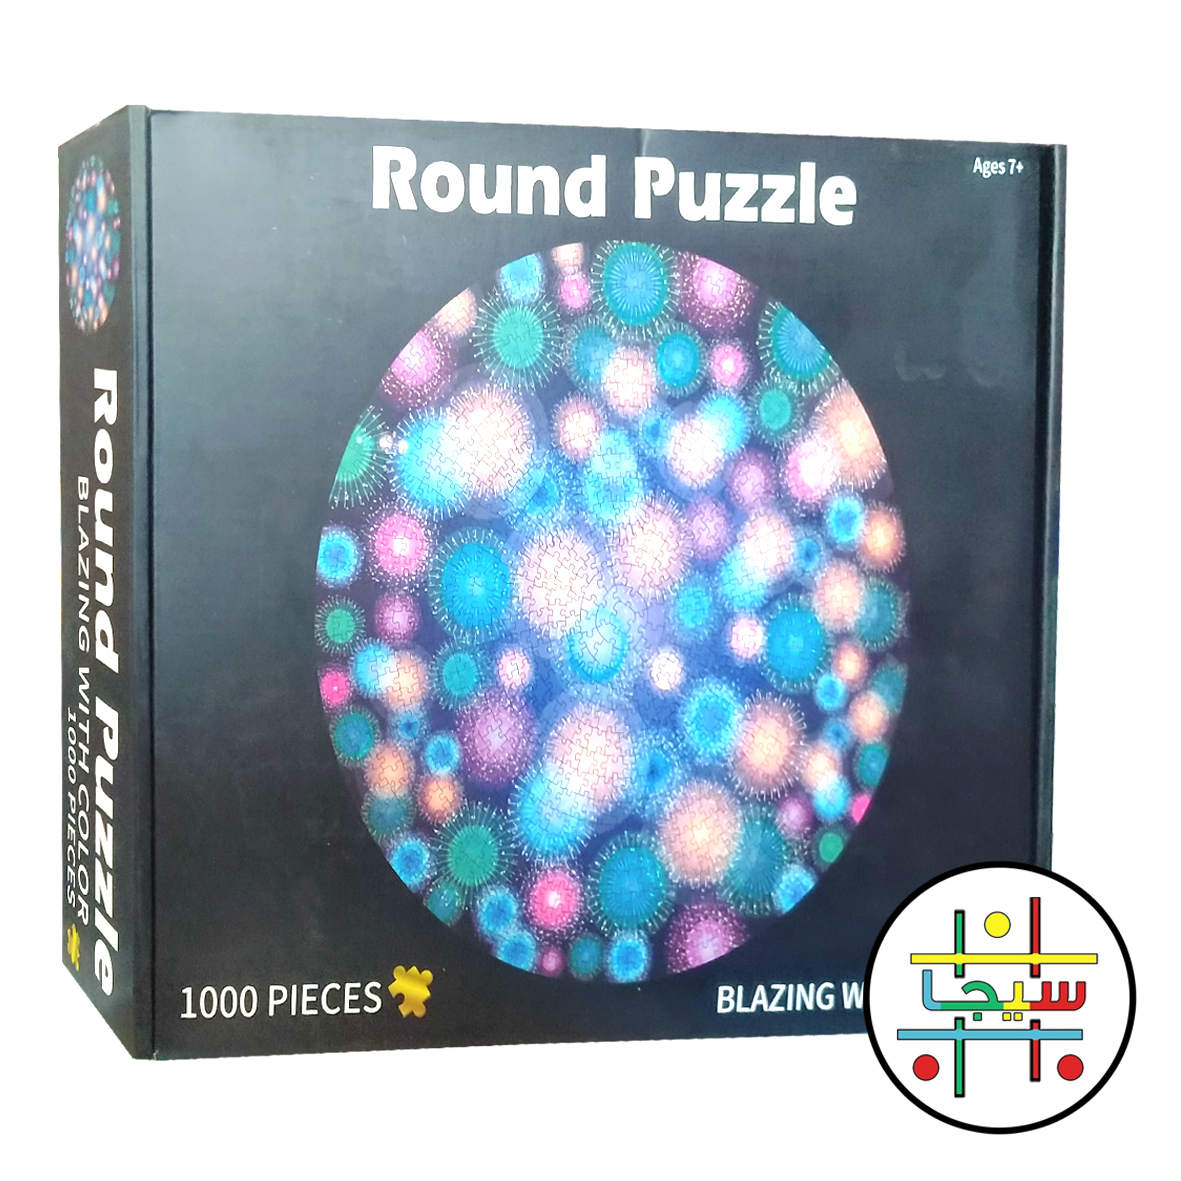 بازل Round Puzzle 1000 pcs